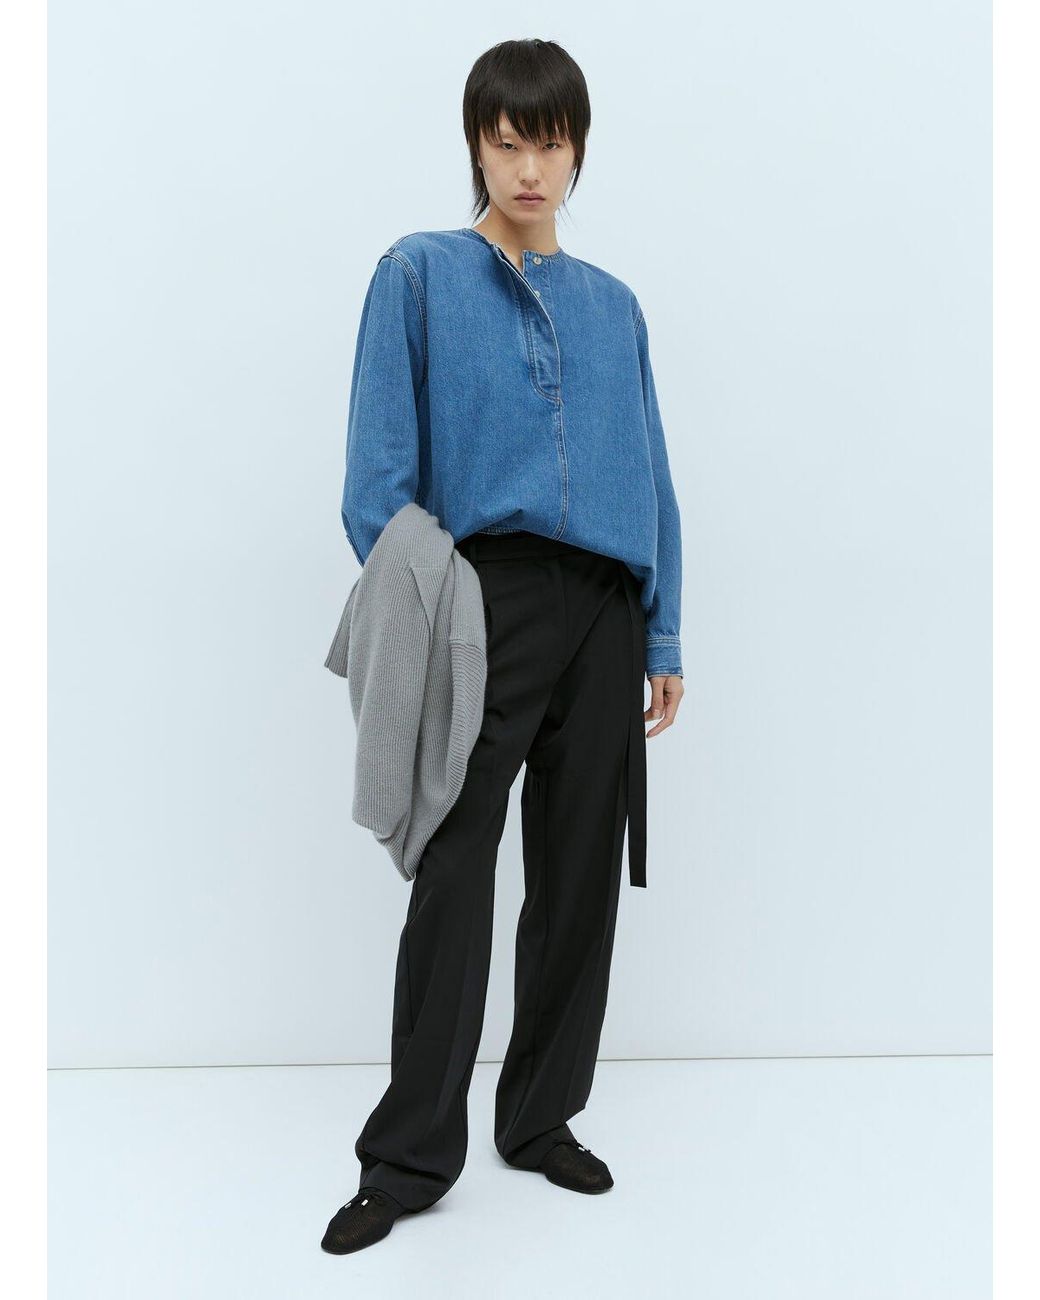 Buy 5EM Men's Slim Fit Cotton Denim Shirt (Ombre Effact) (Medium) Blue at  Amazon.in